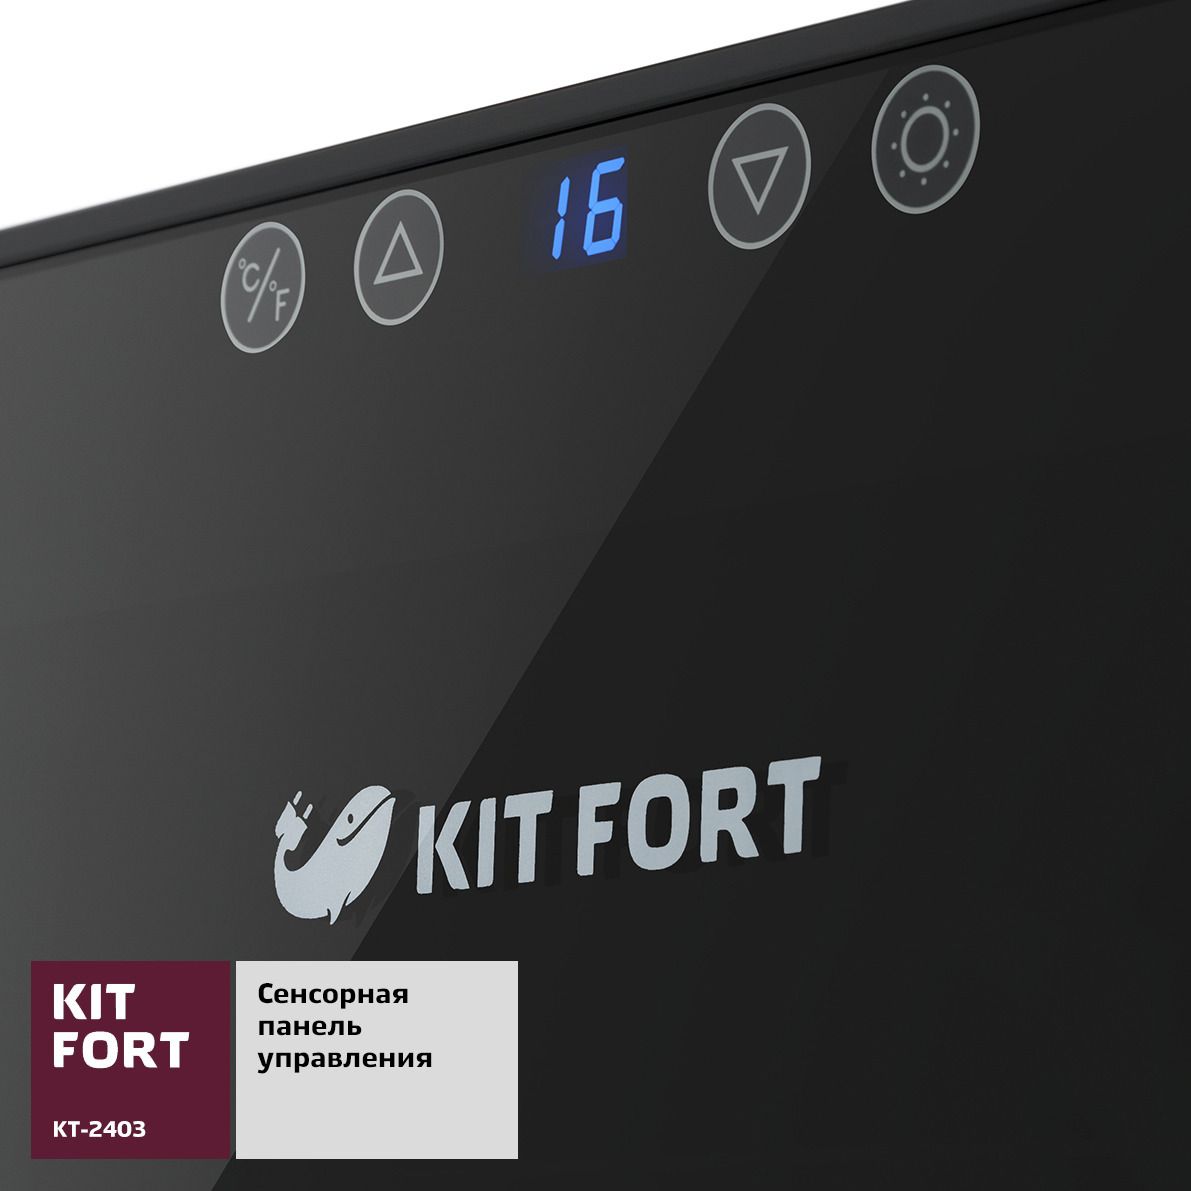   Kitfort, -2403